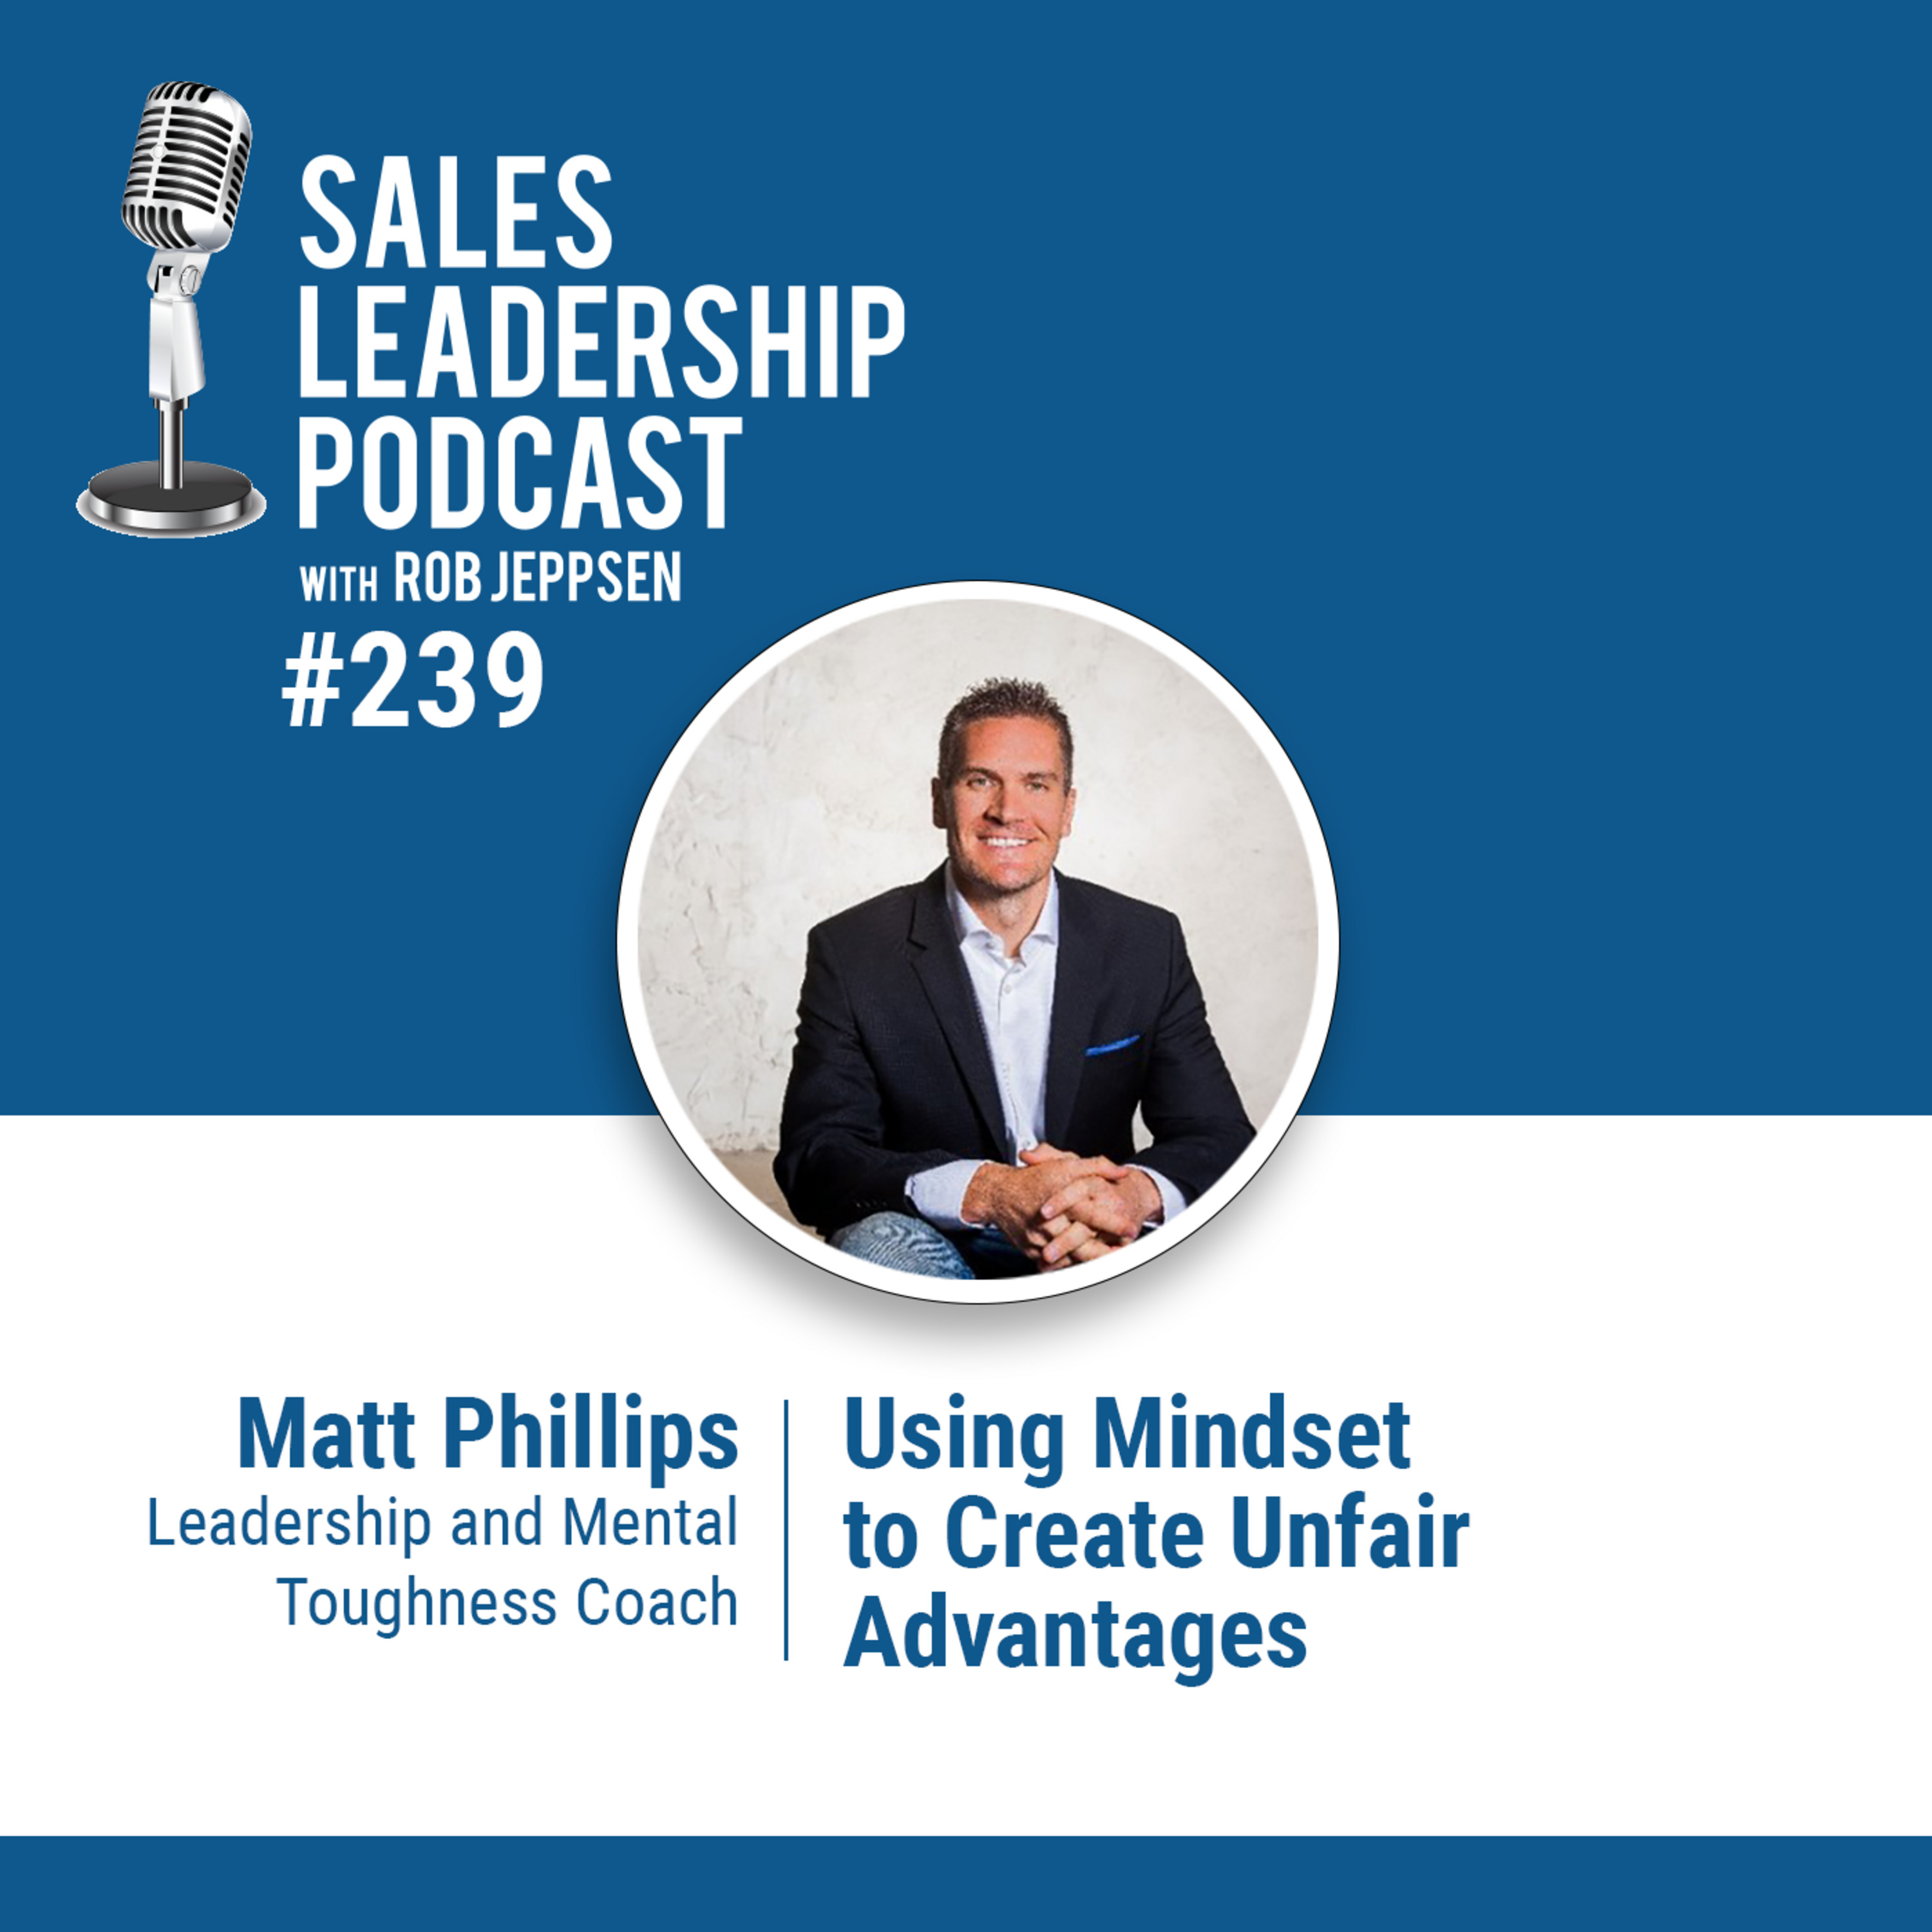 Episode 239: Matt Phillips, Leadership and Mental Toughness Coach: Using Mindset to Create Unfair Advantages